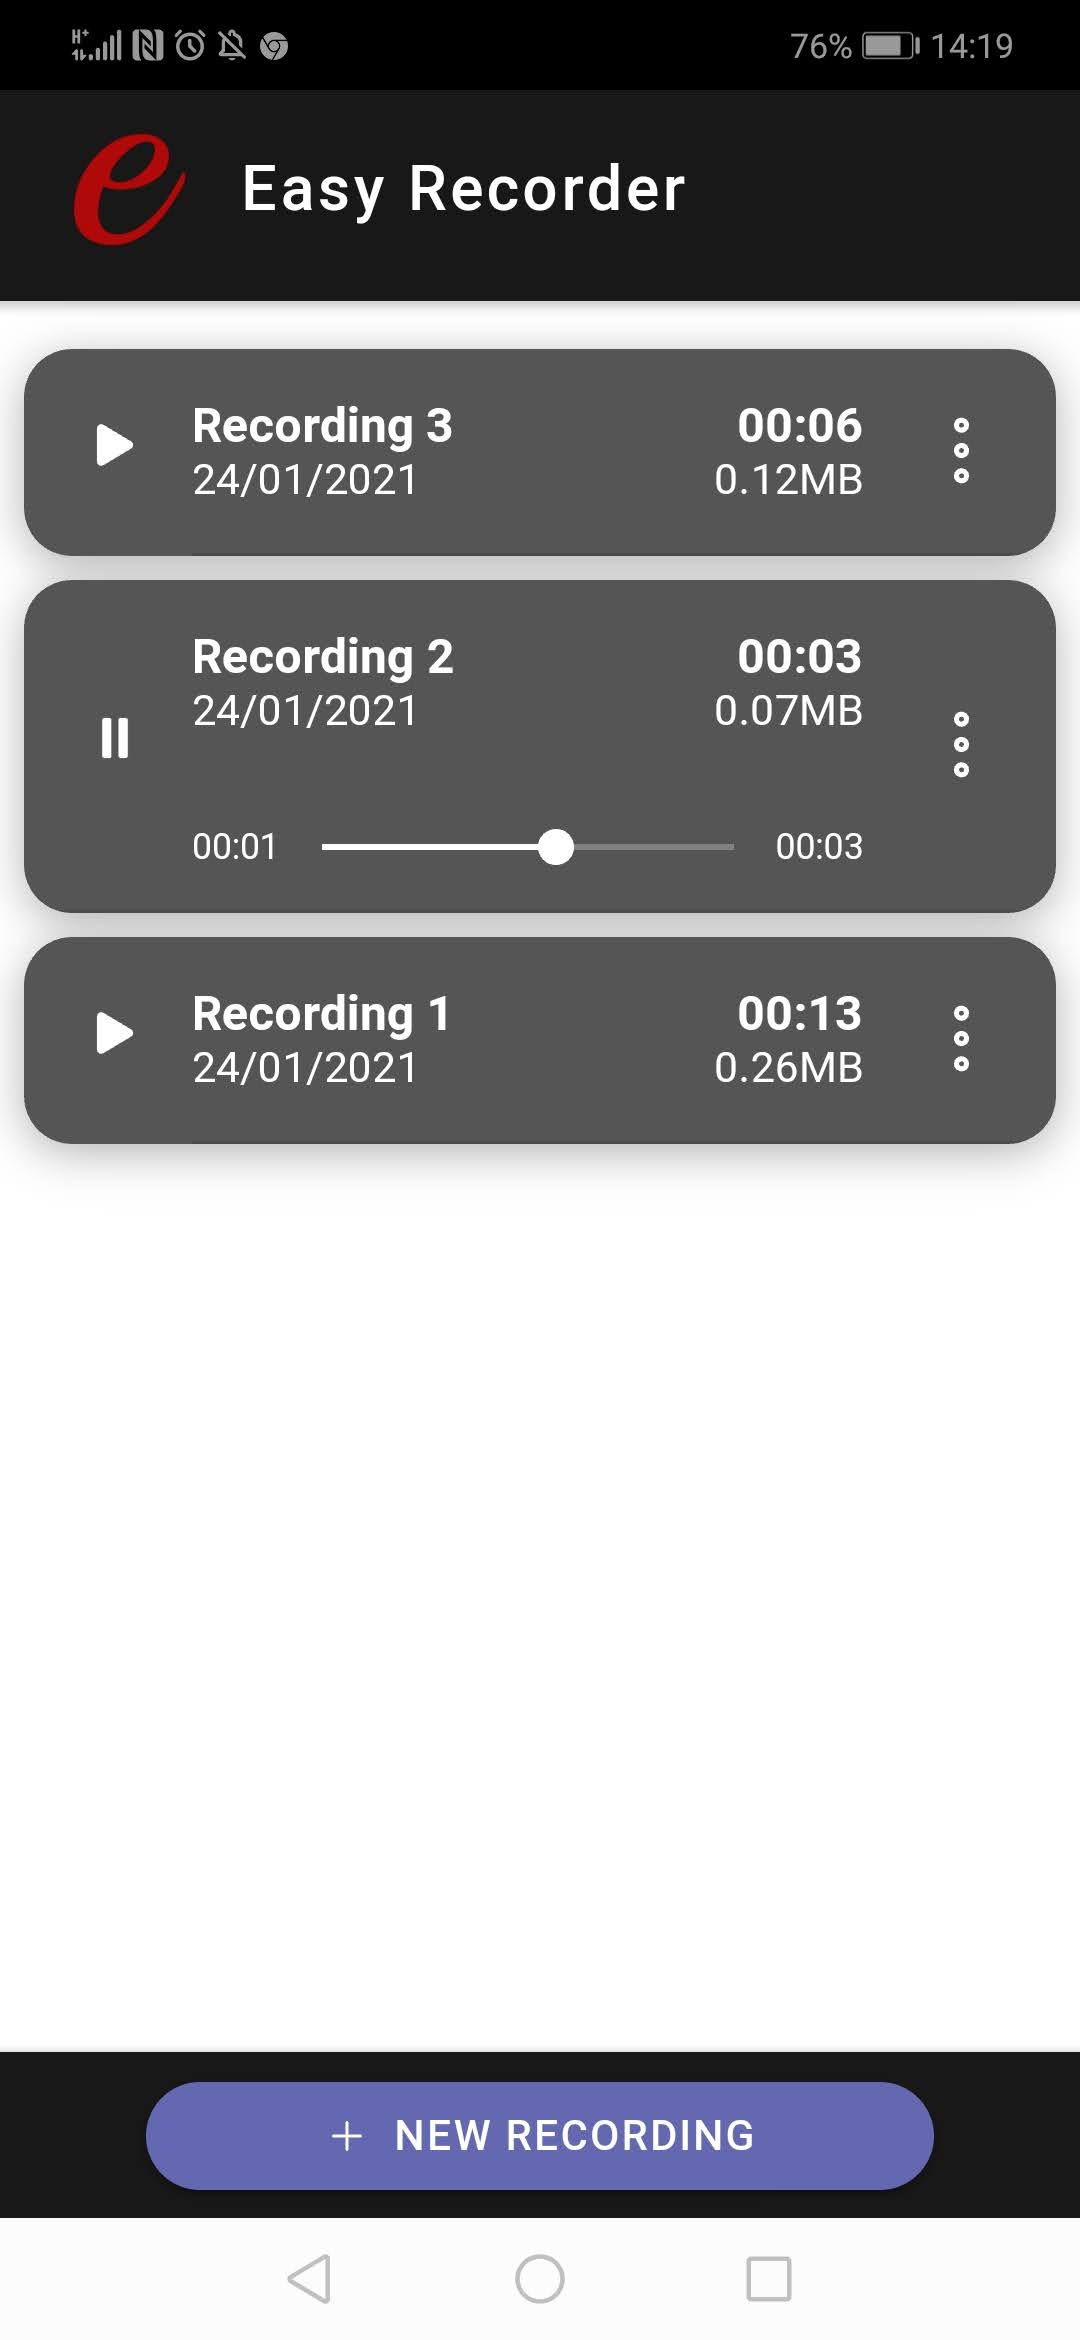 Easy Recorder App